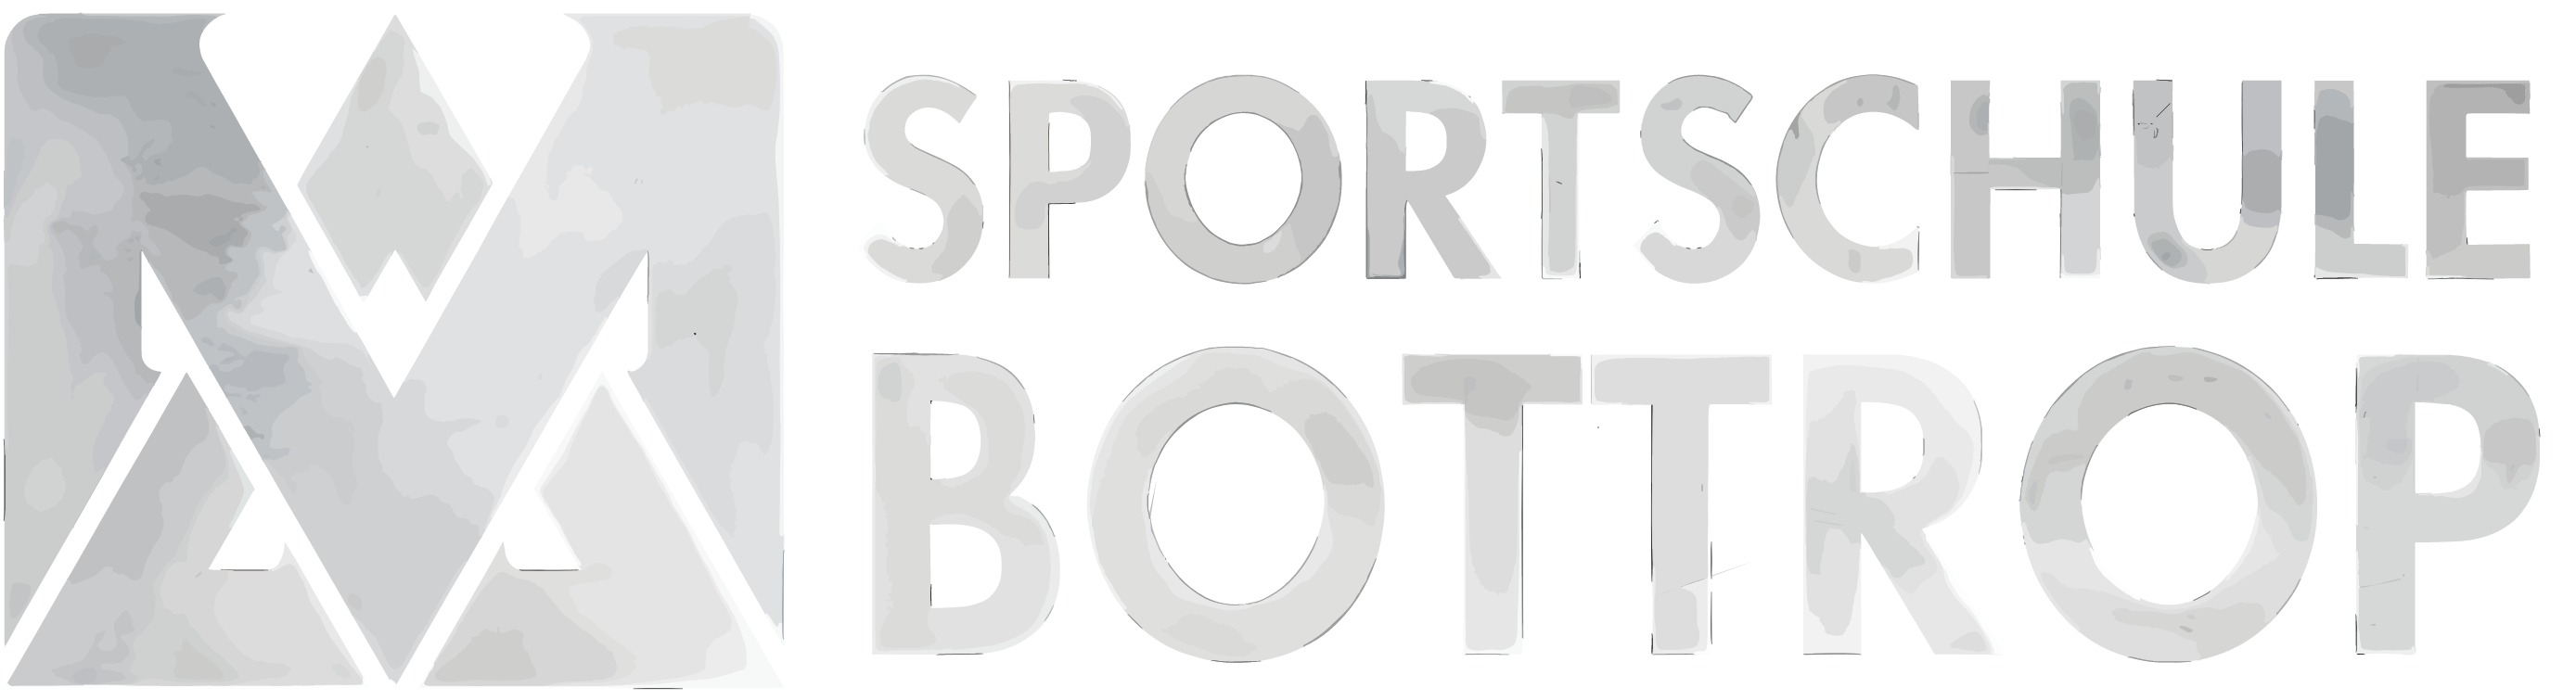 Sportschule Bottrop